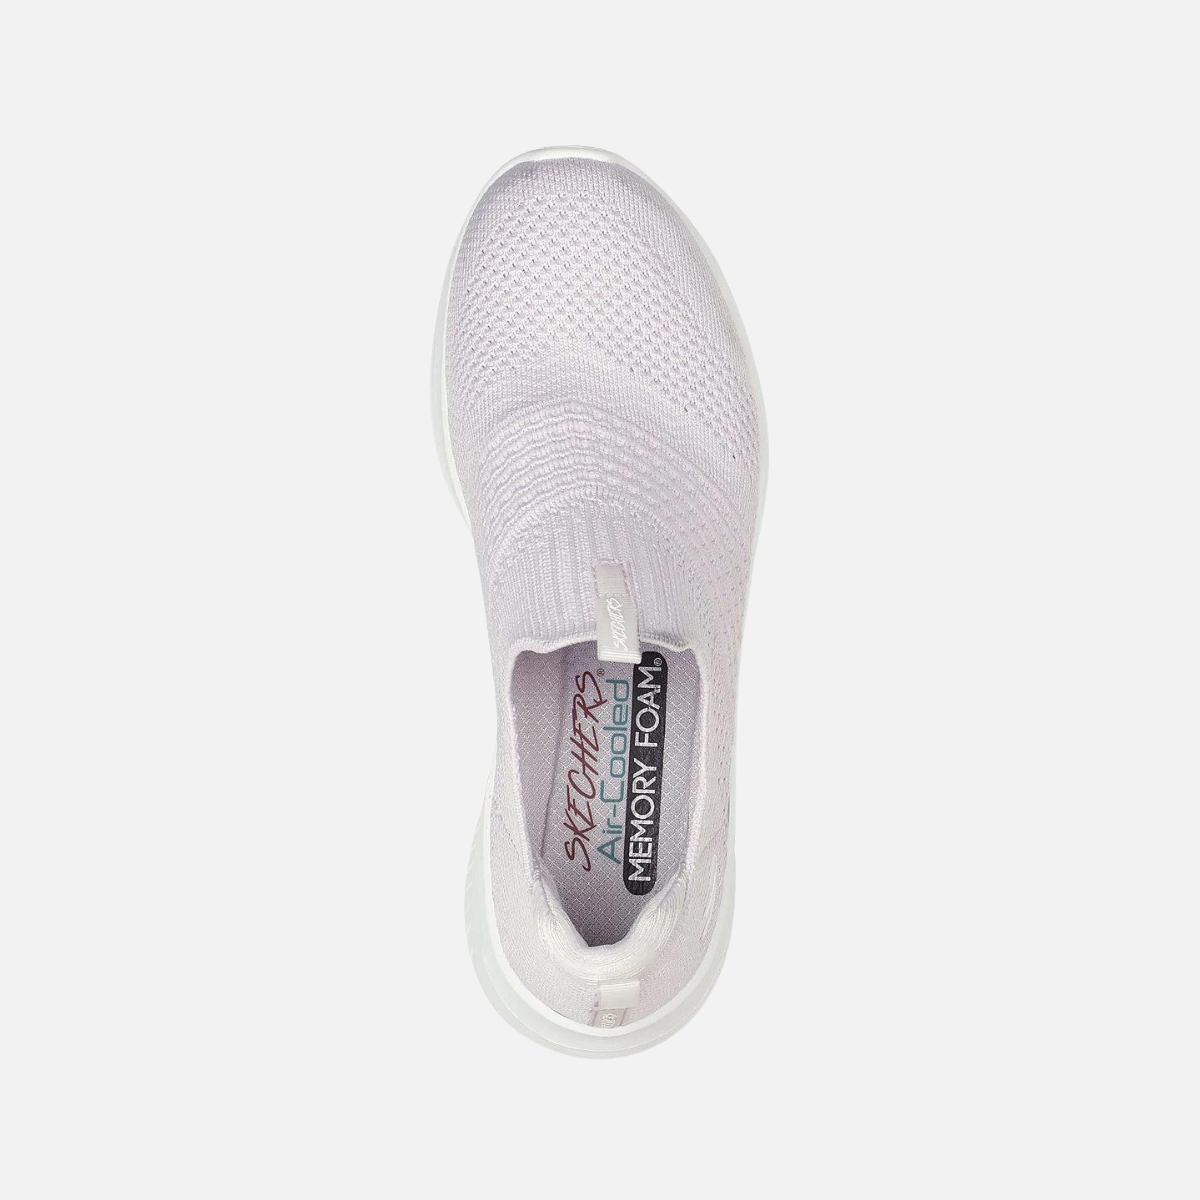 Skechers Ultra Flex 3.0 Classy Charm Women's Running Shoes -Lavender